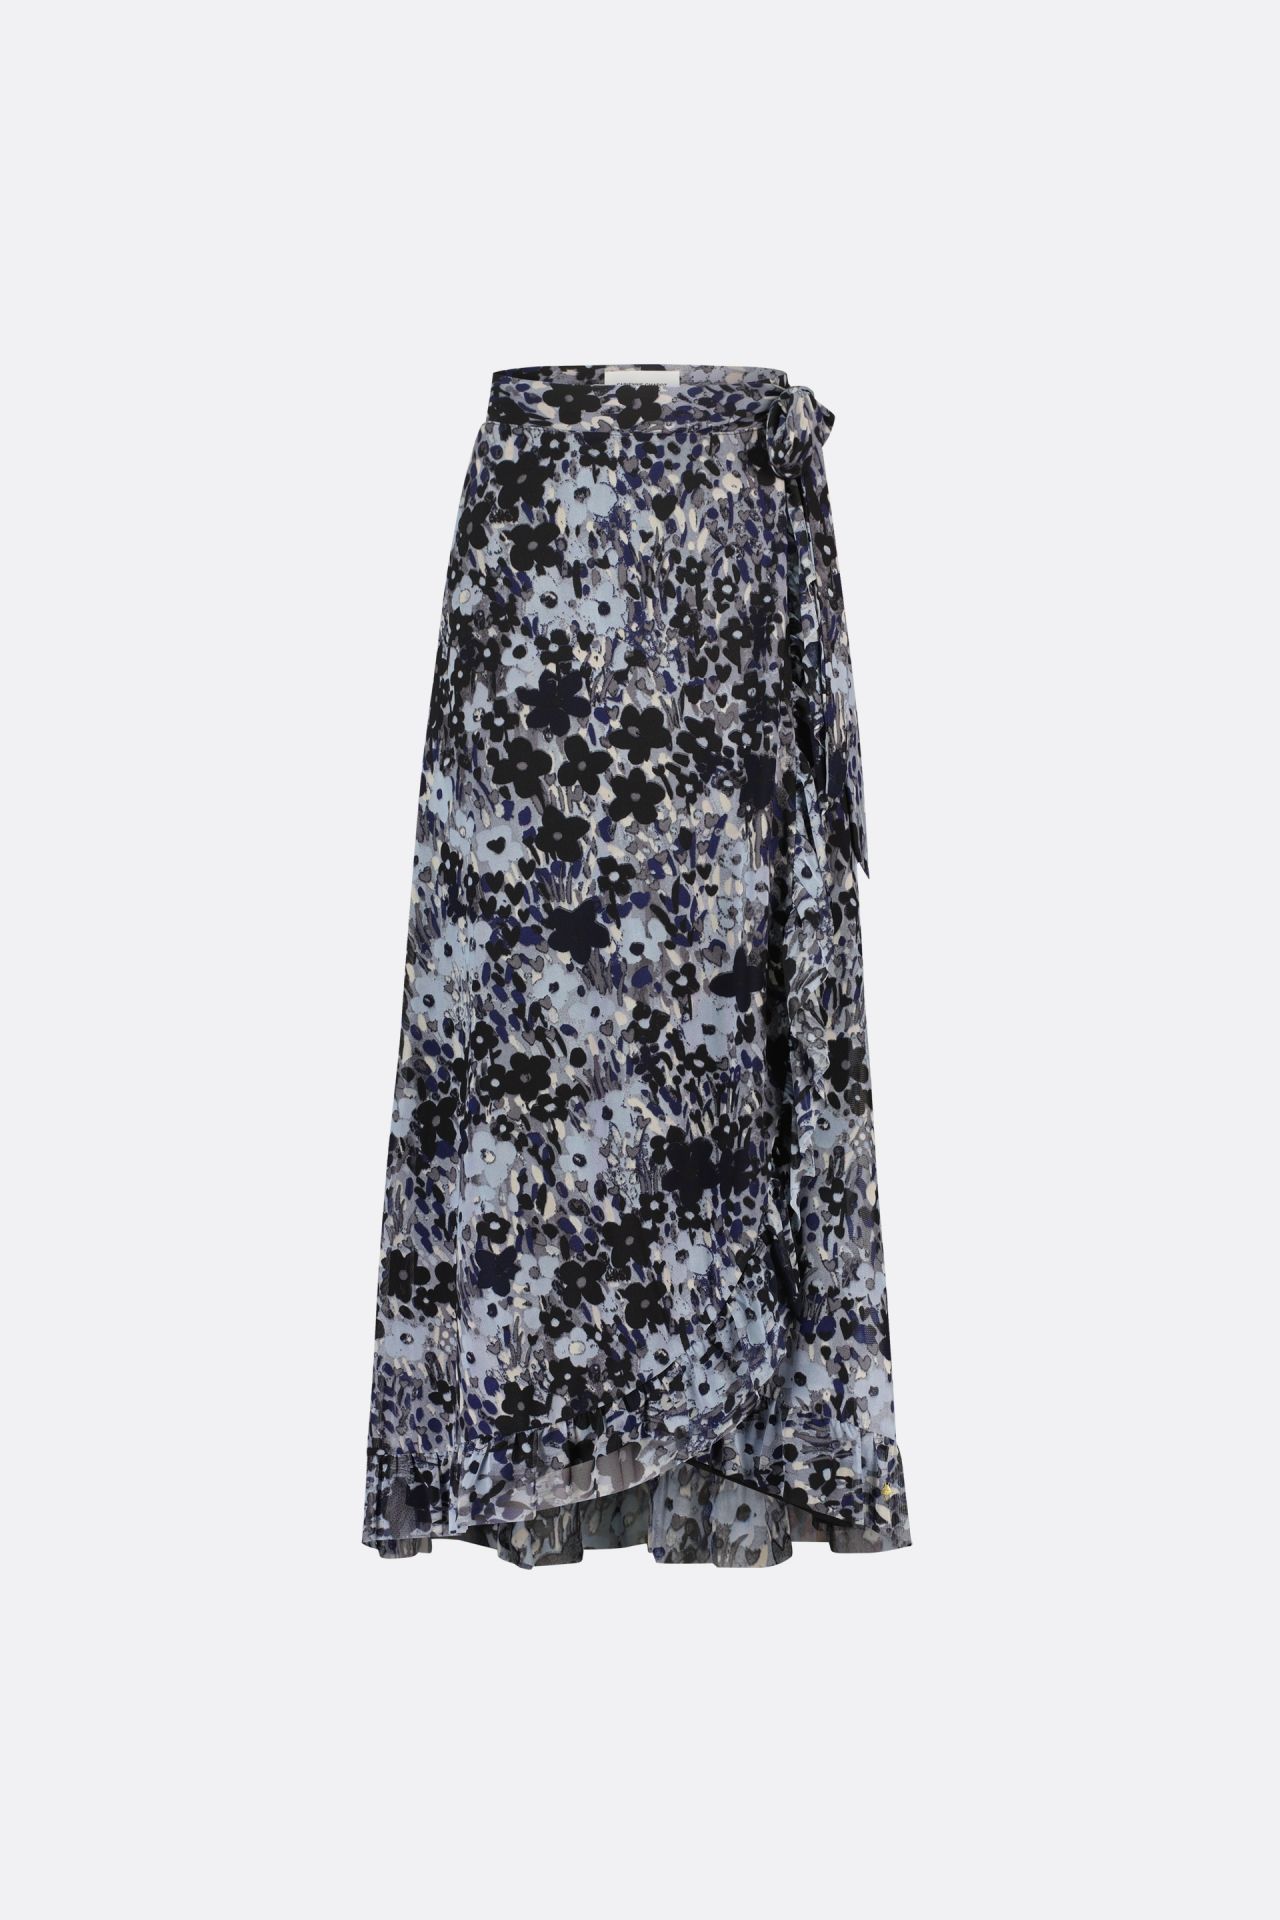 Blauwe dames rok met print Fabienne Chapot - Bobo frill skirt